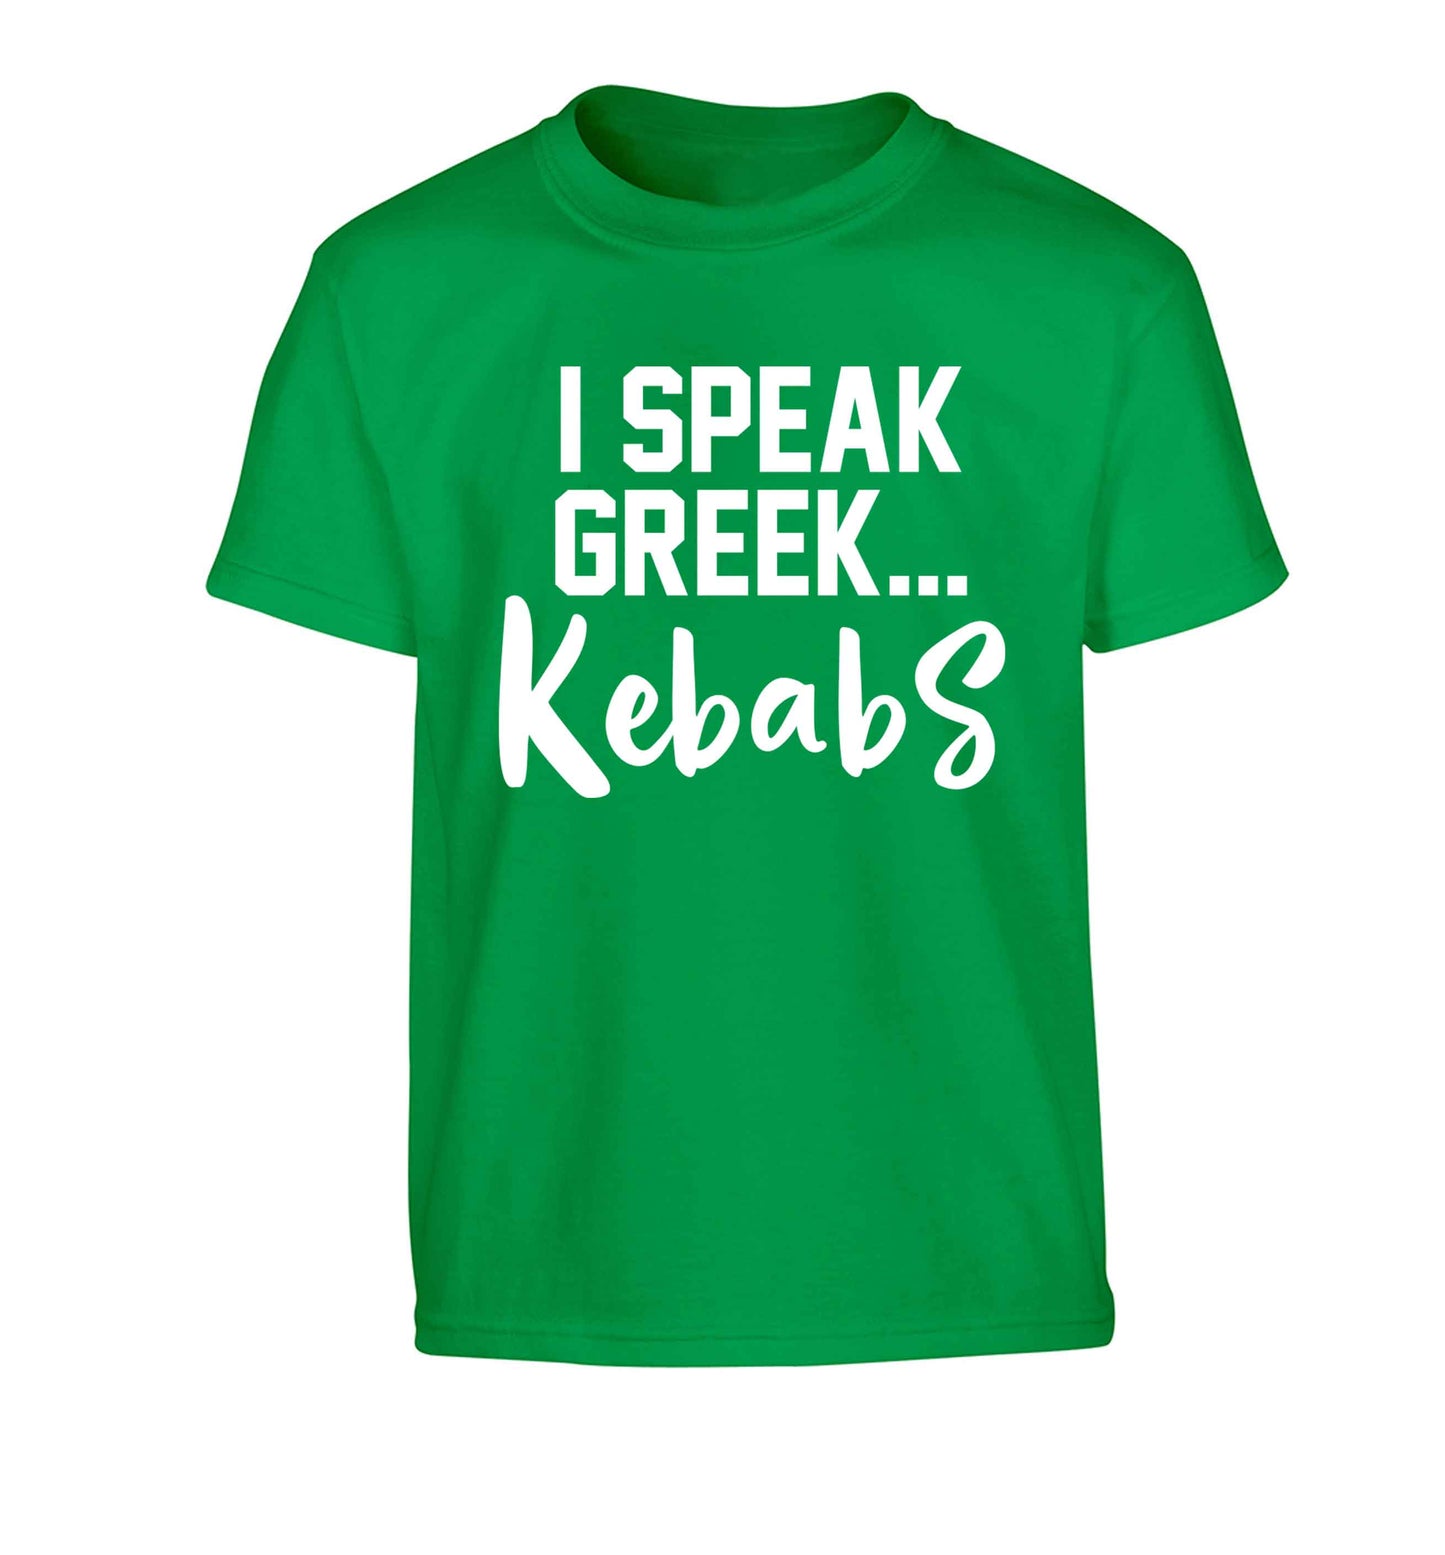 I speak Greek...kebabs Children's green Tshirt 12-13 Years